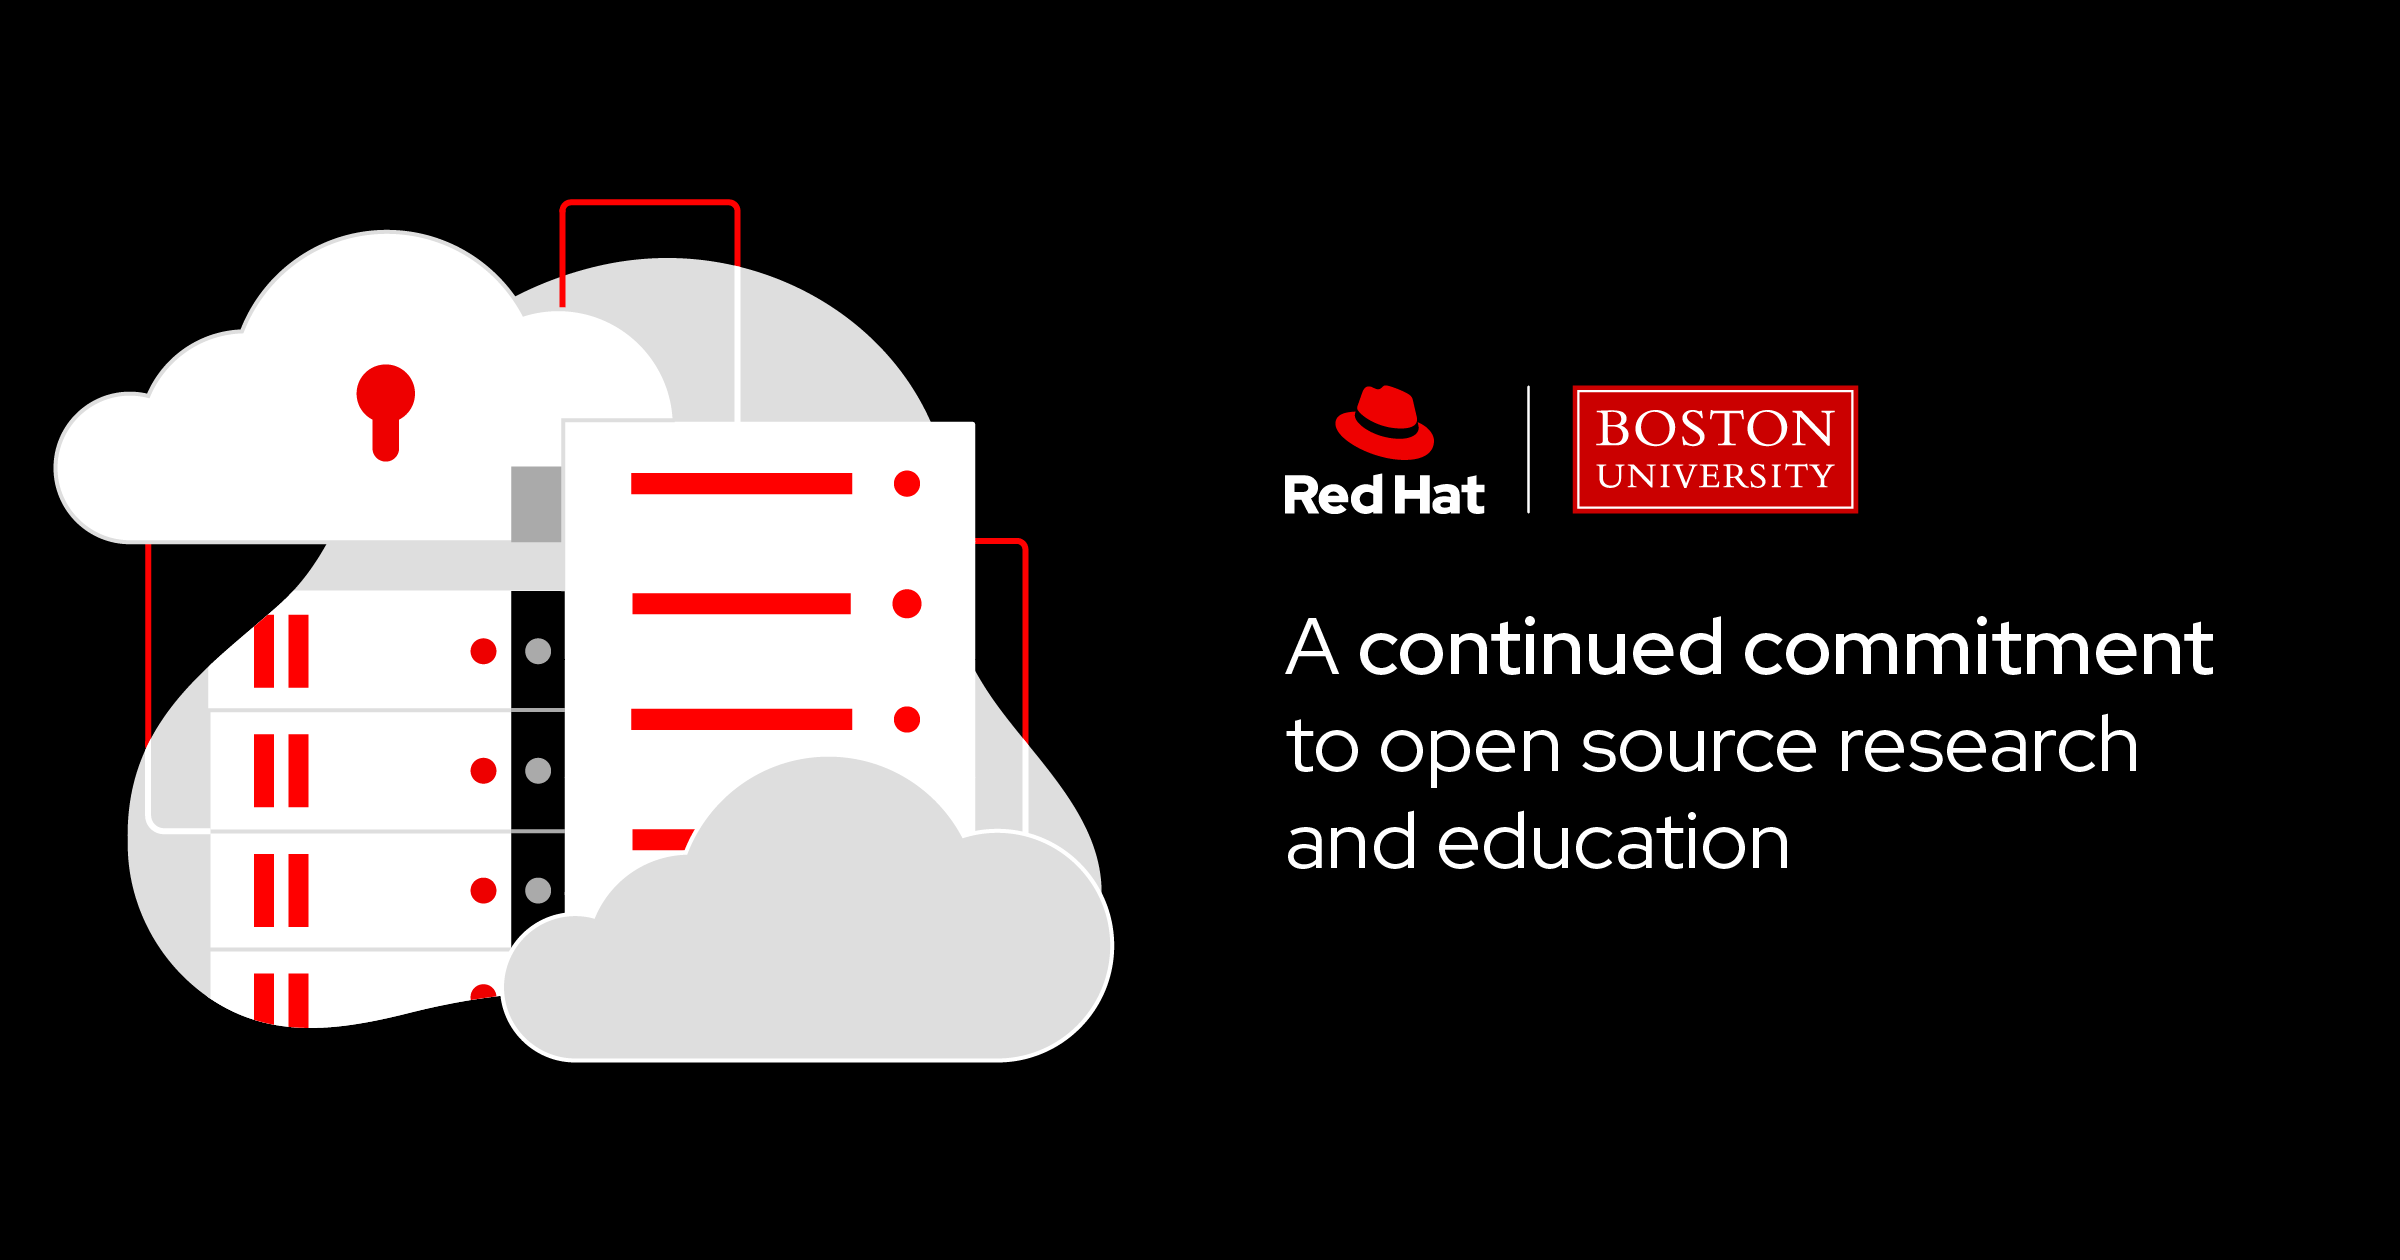 Red Hat Boston University partnership illustration